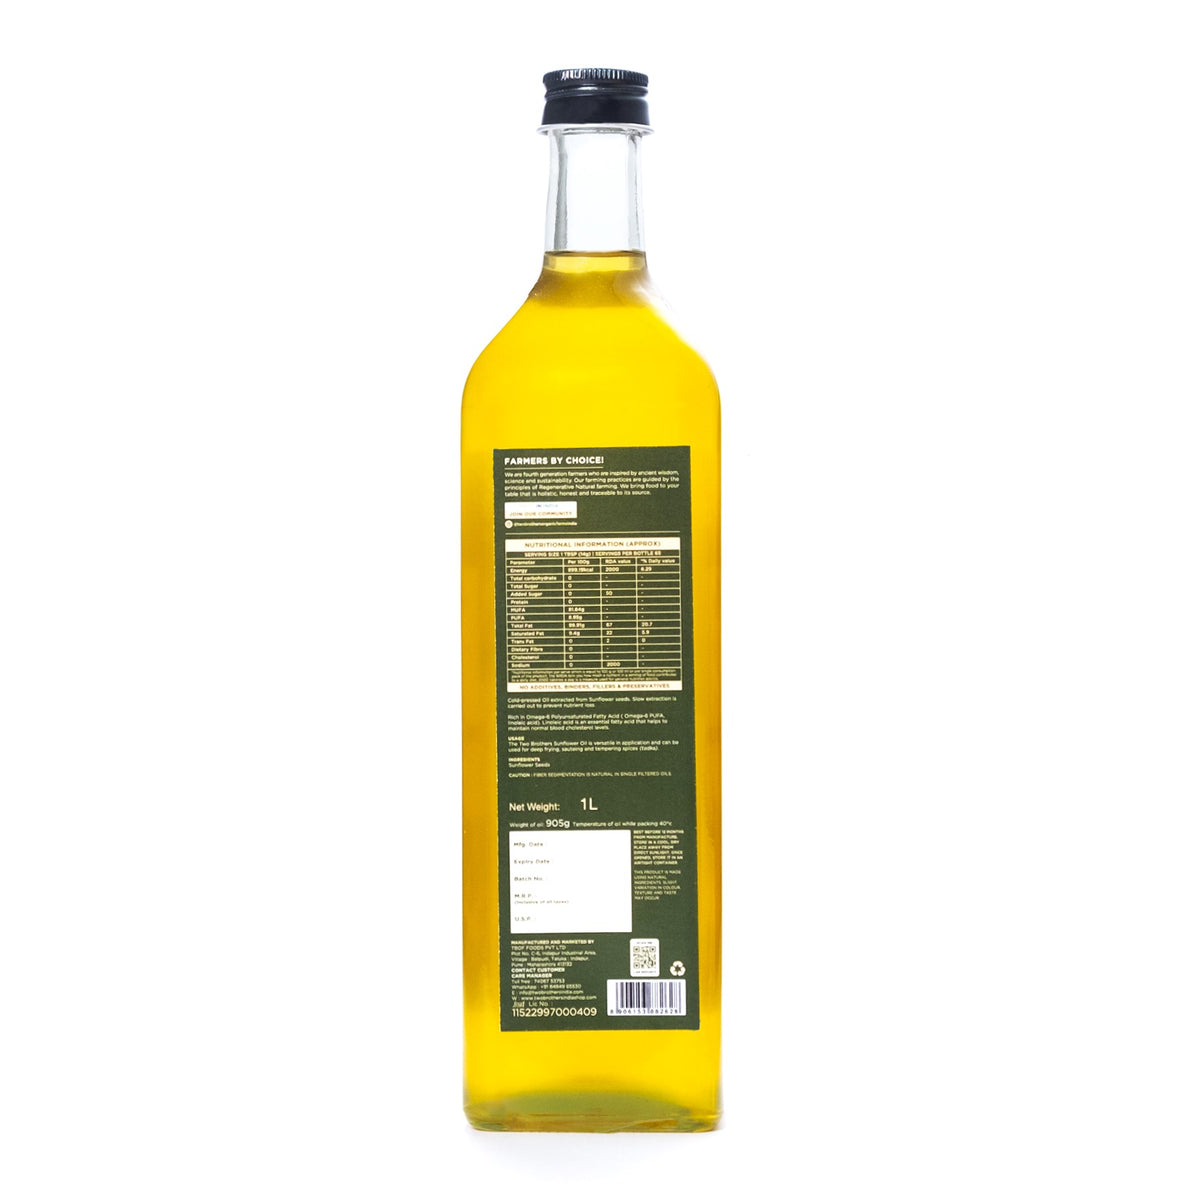 Sunflower oil nutritional value per 100gm